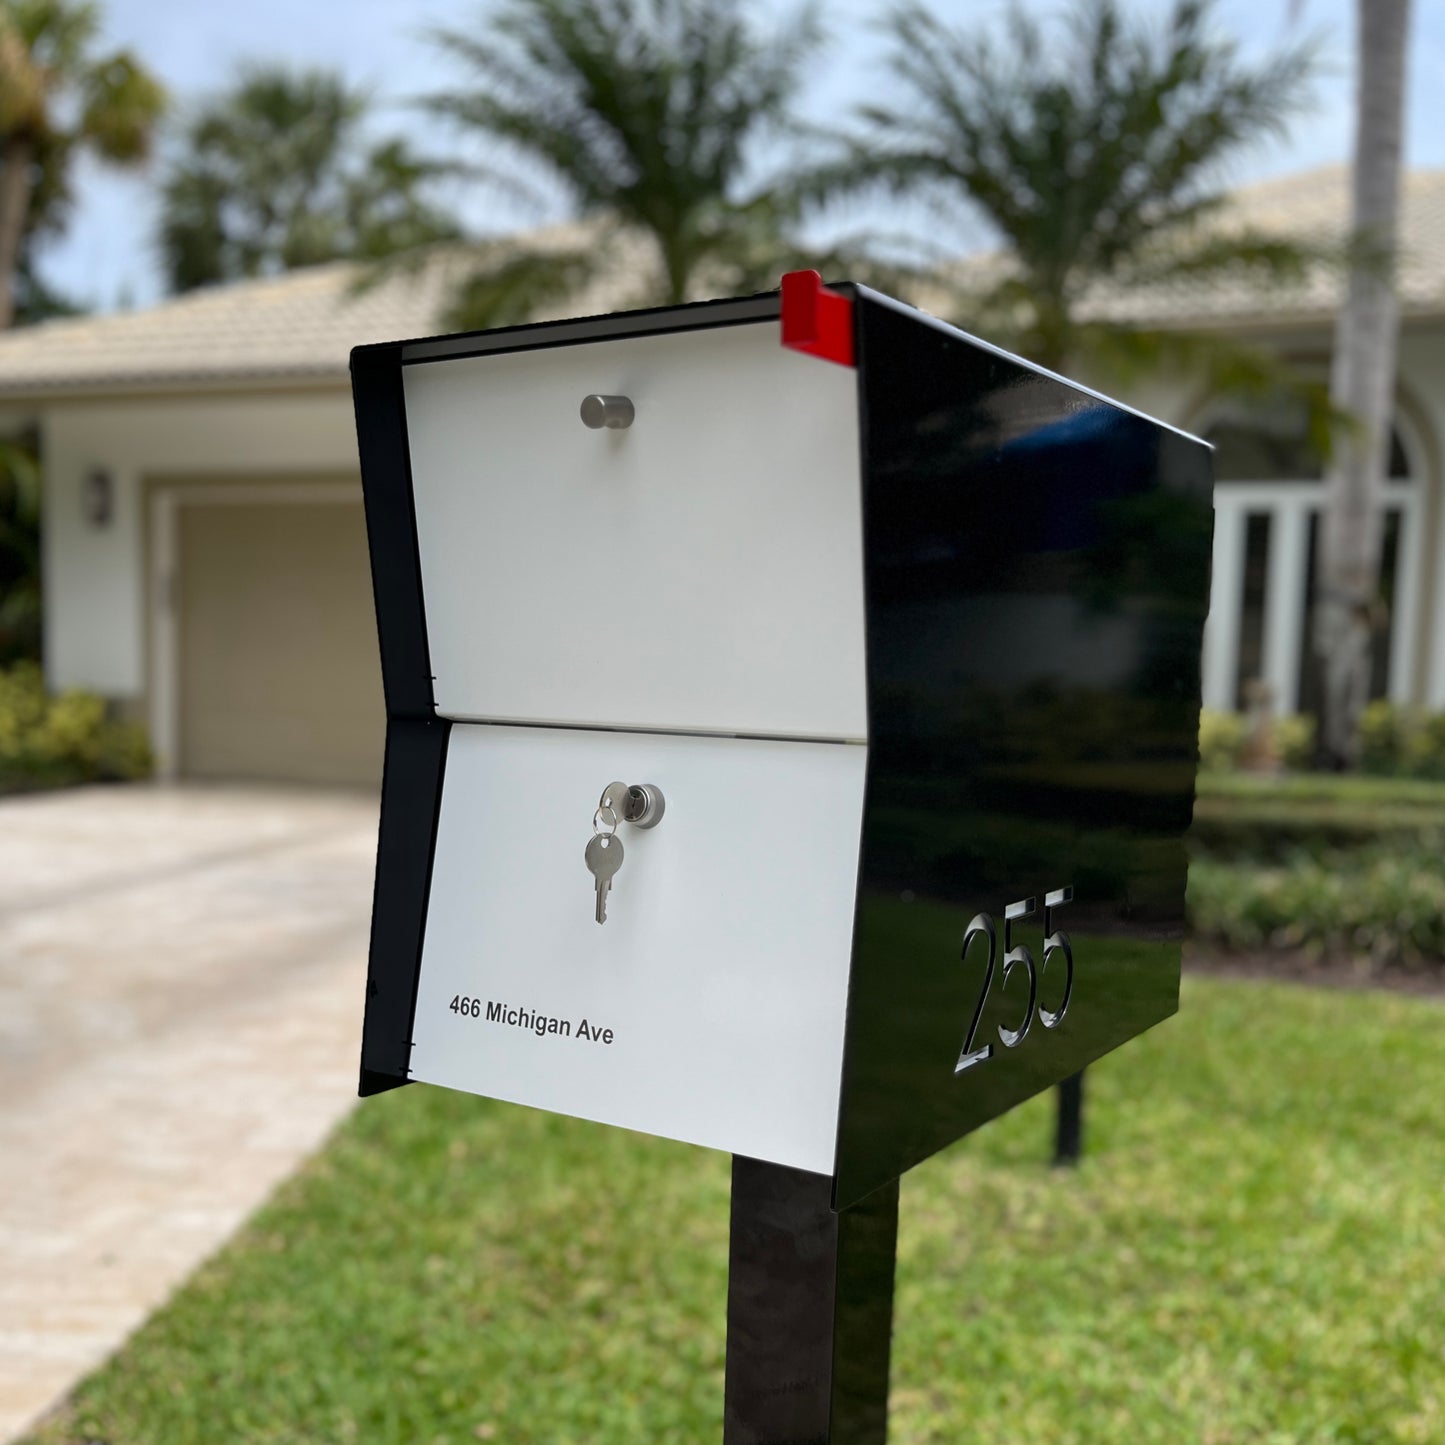 NEW! The Retrobox Locking Package Dropbox in JET BLACK - Modern Mailbox